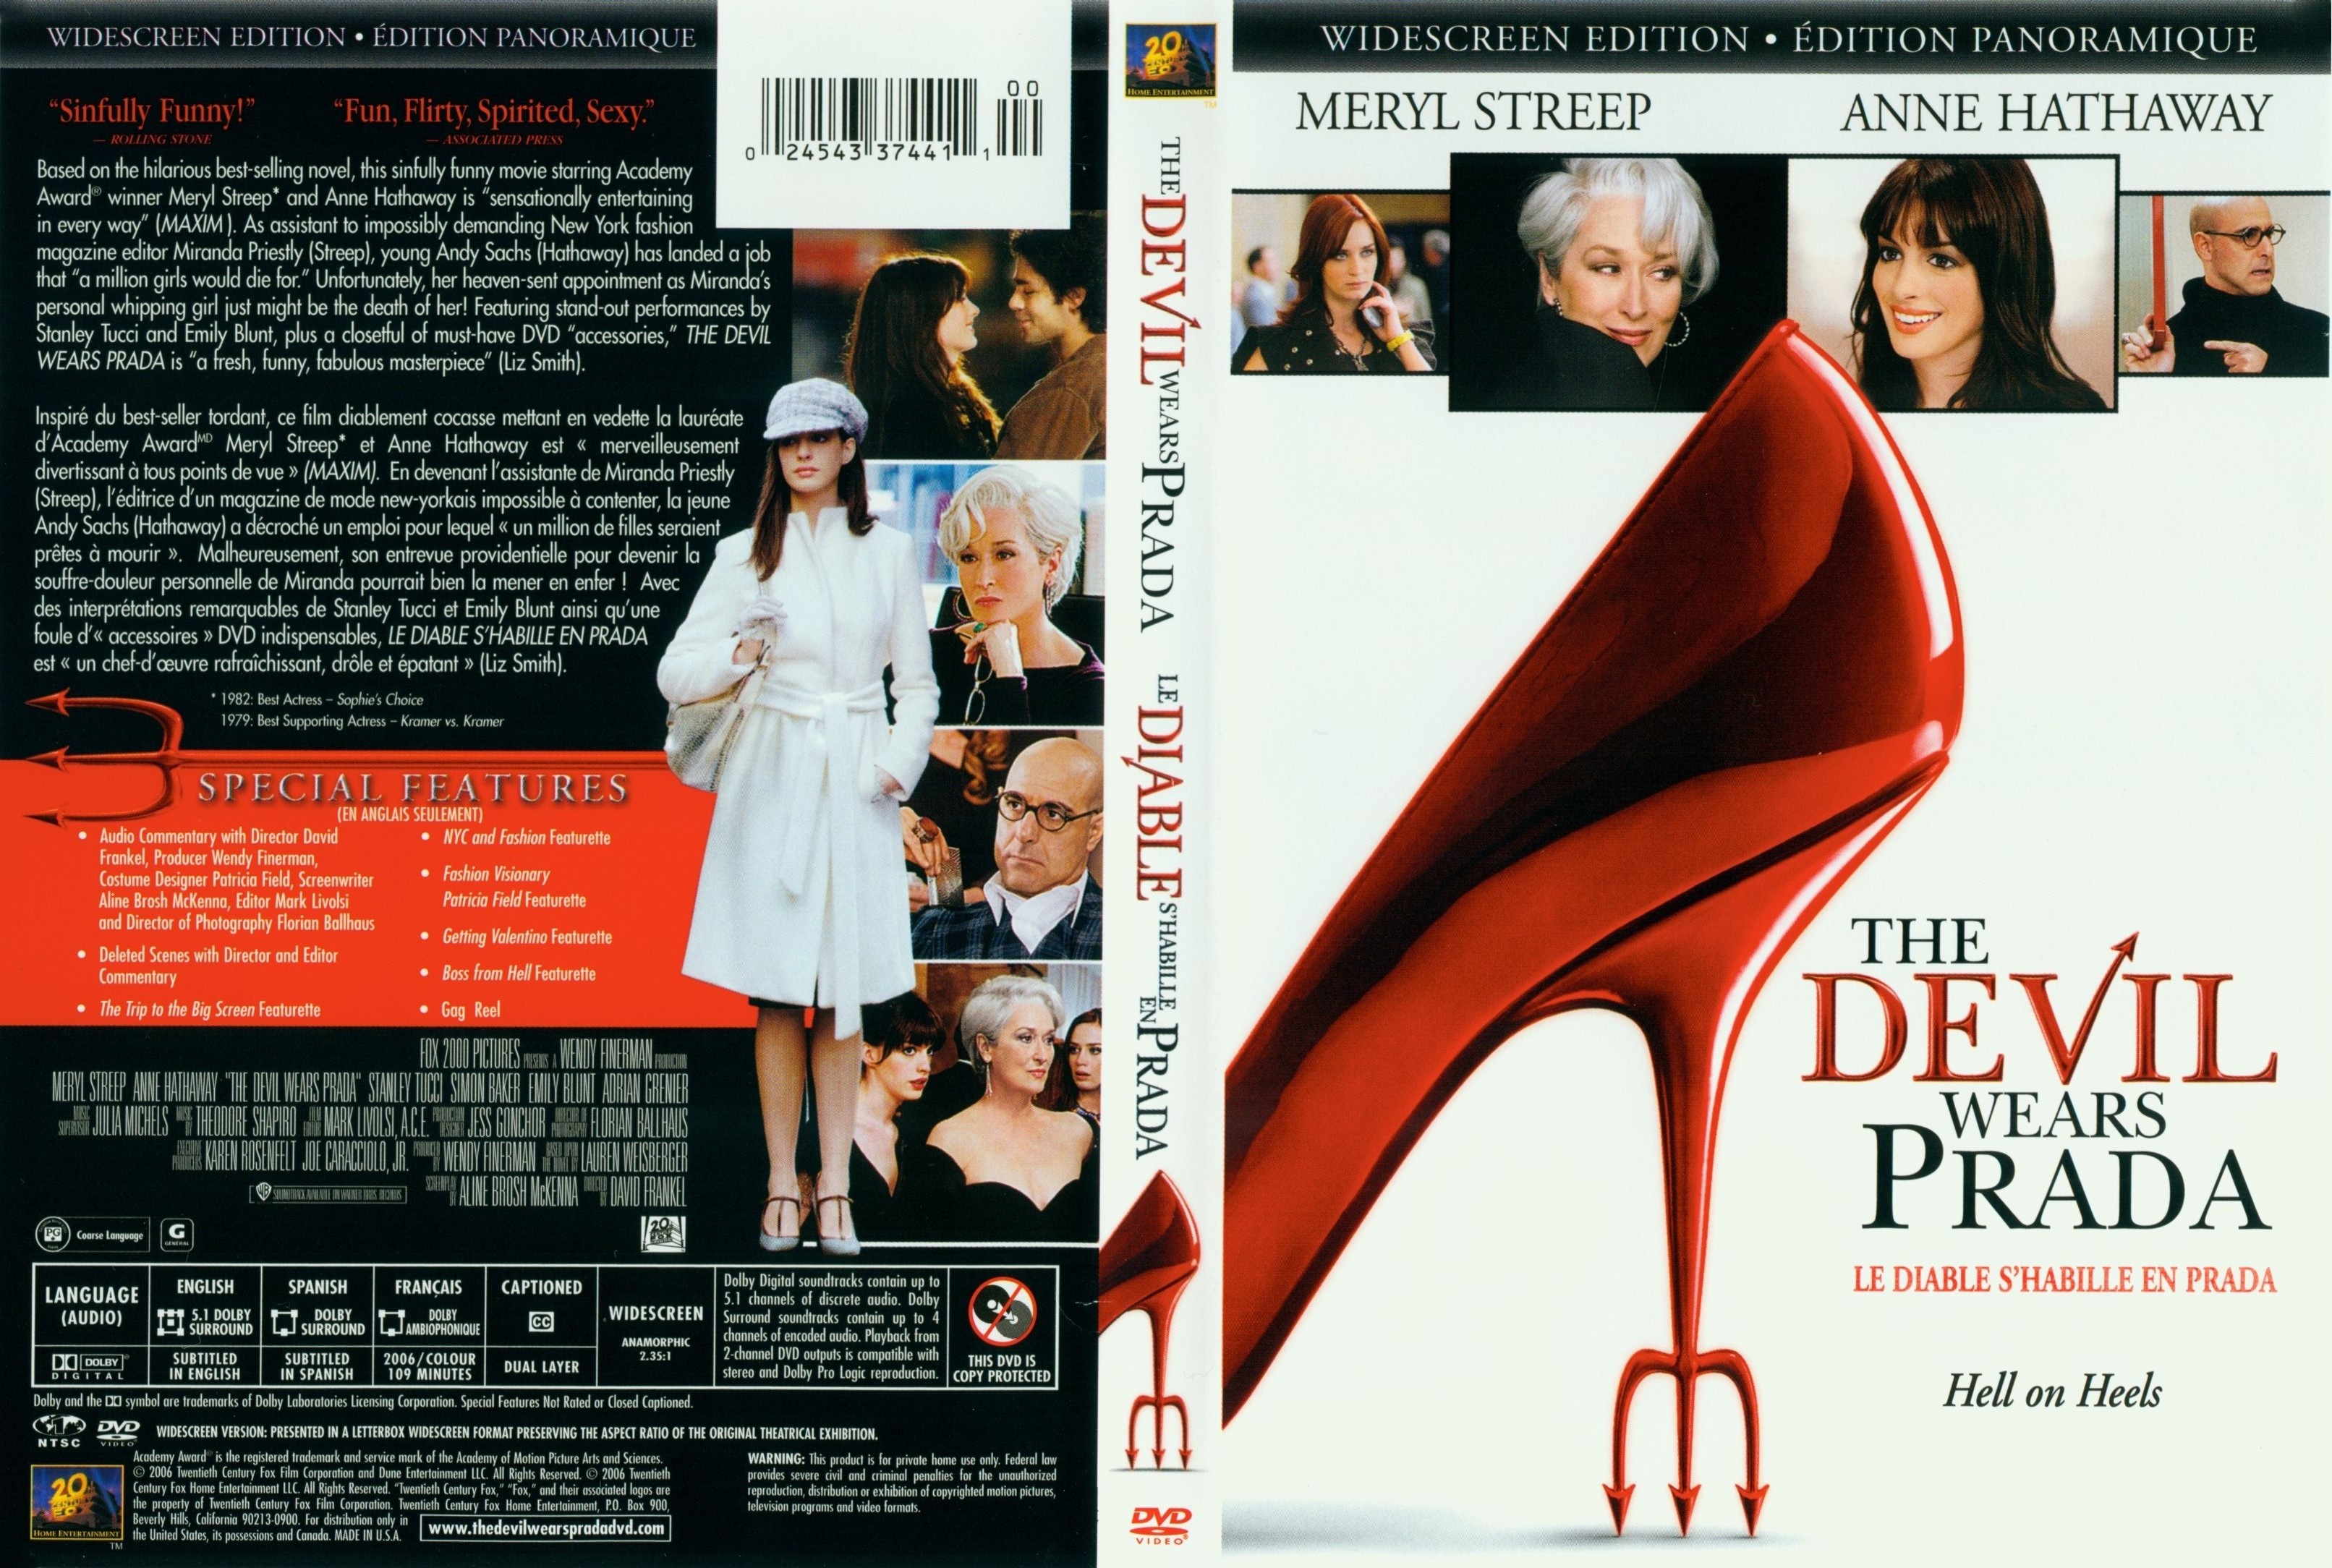 Jaquette DVD The devil weard in prada - Le diable s